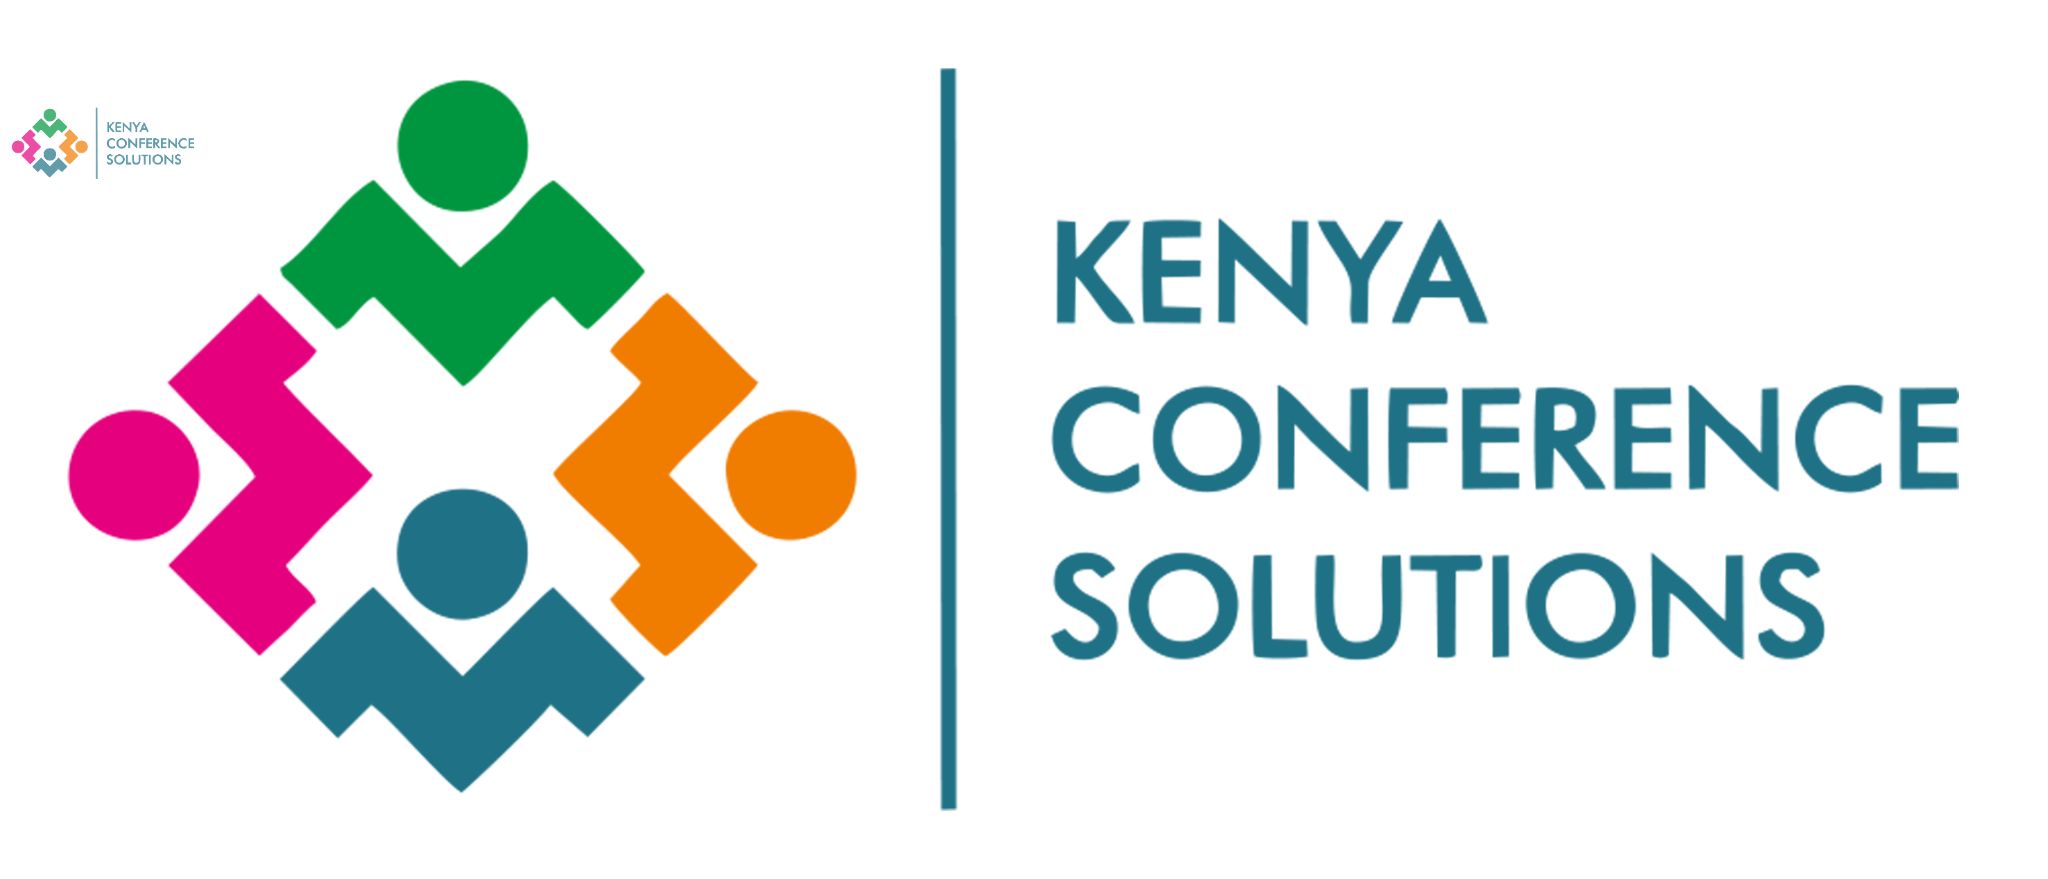 Kenya Conference Solutions